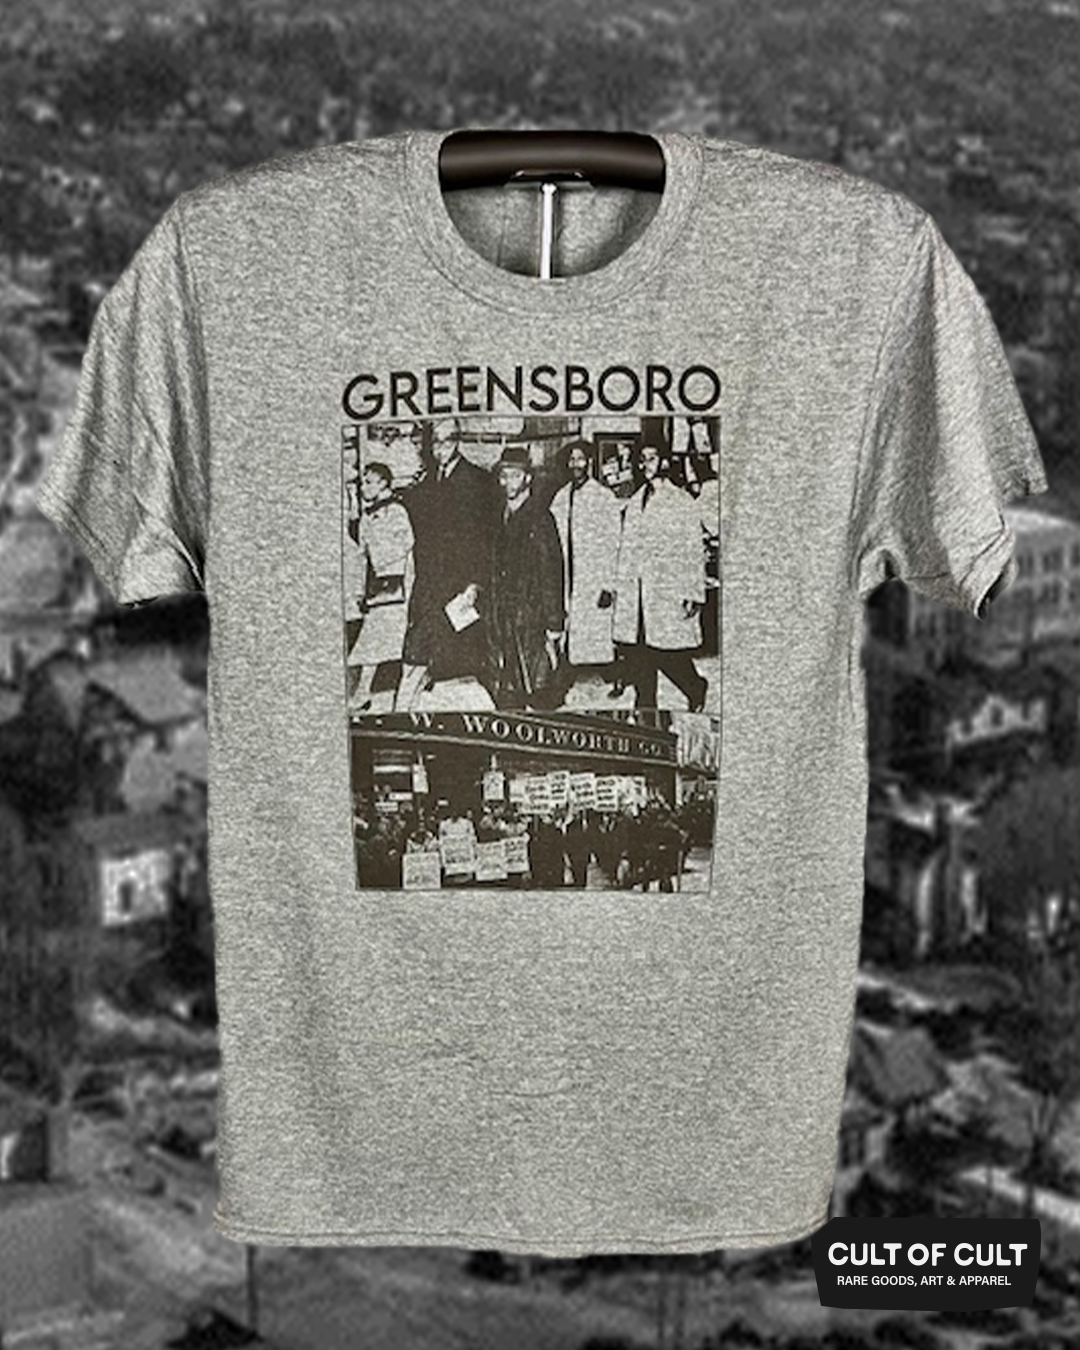 Greensboro sentarse en camisa